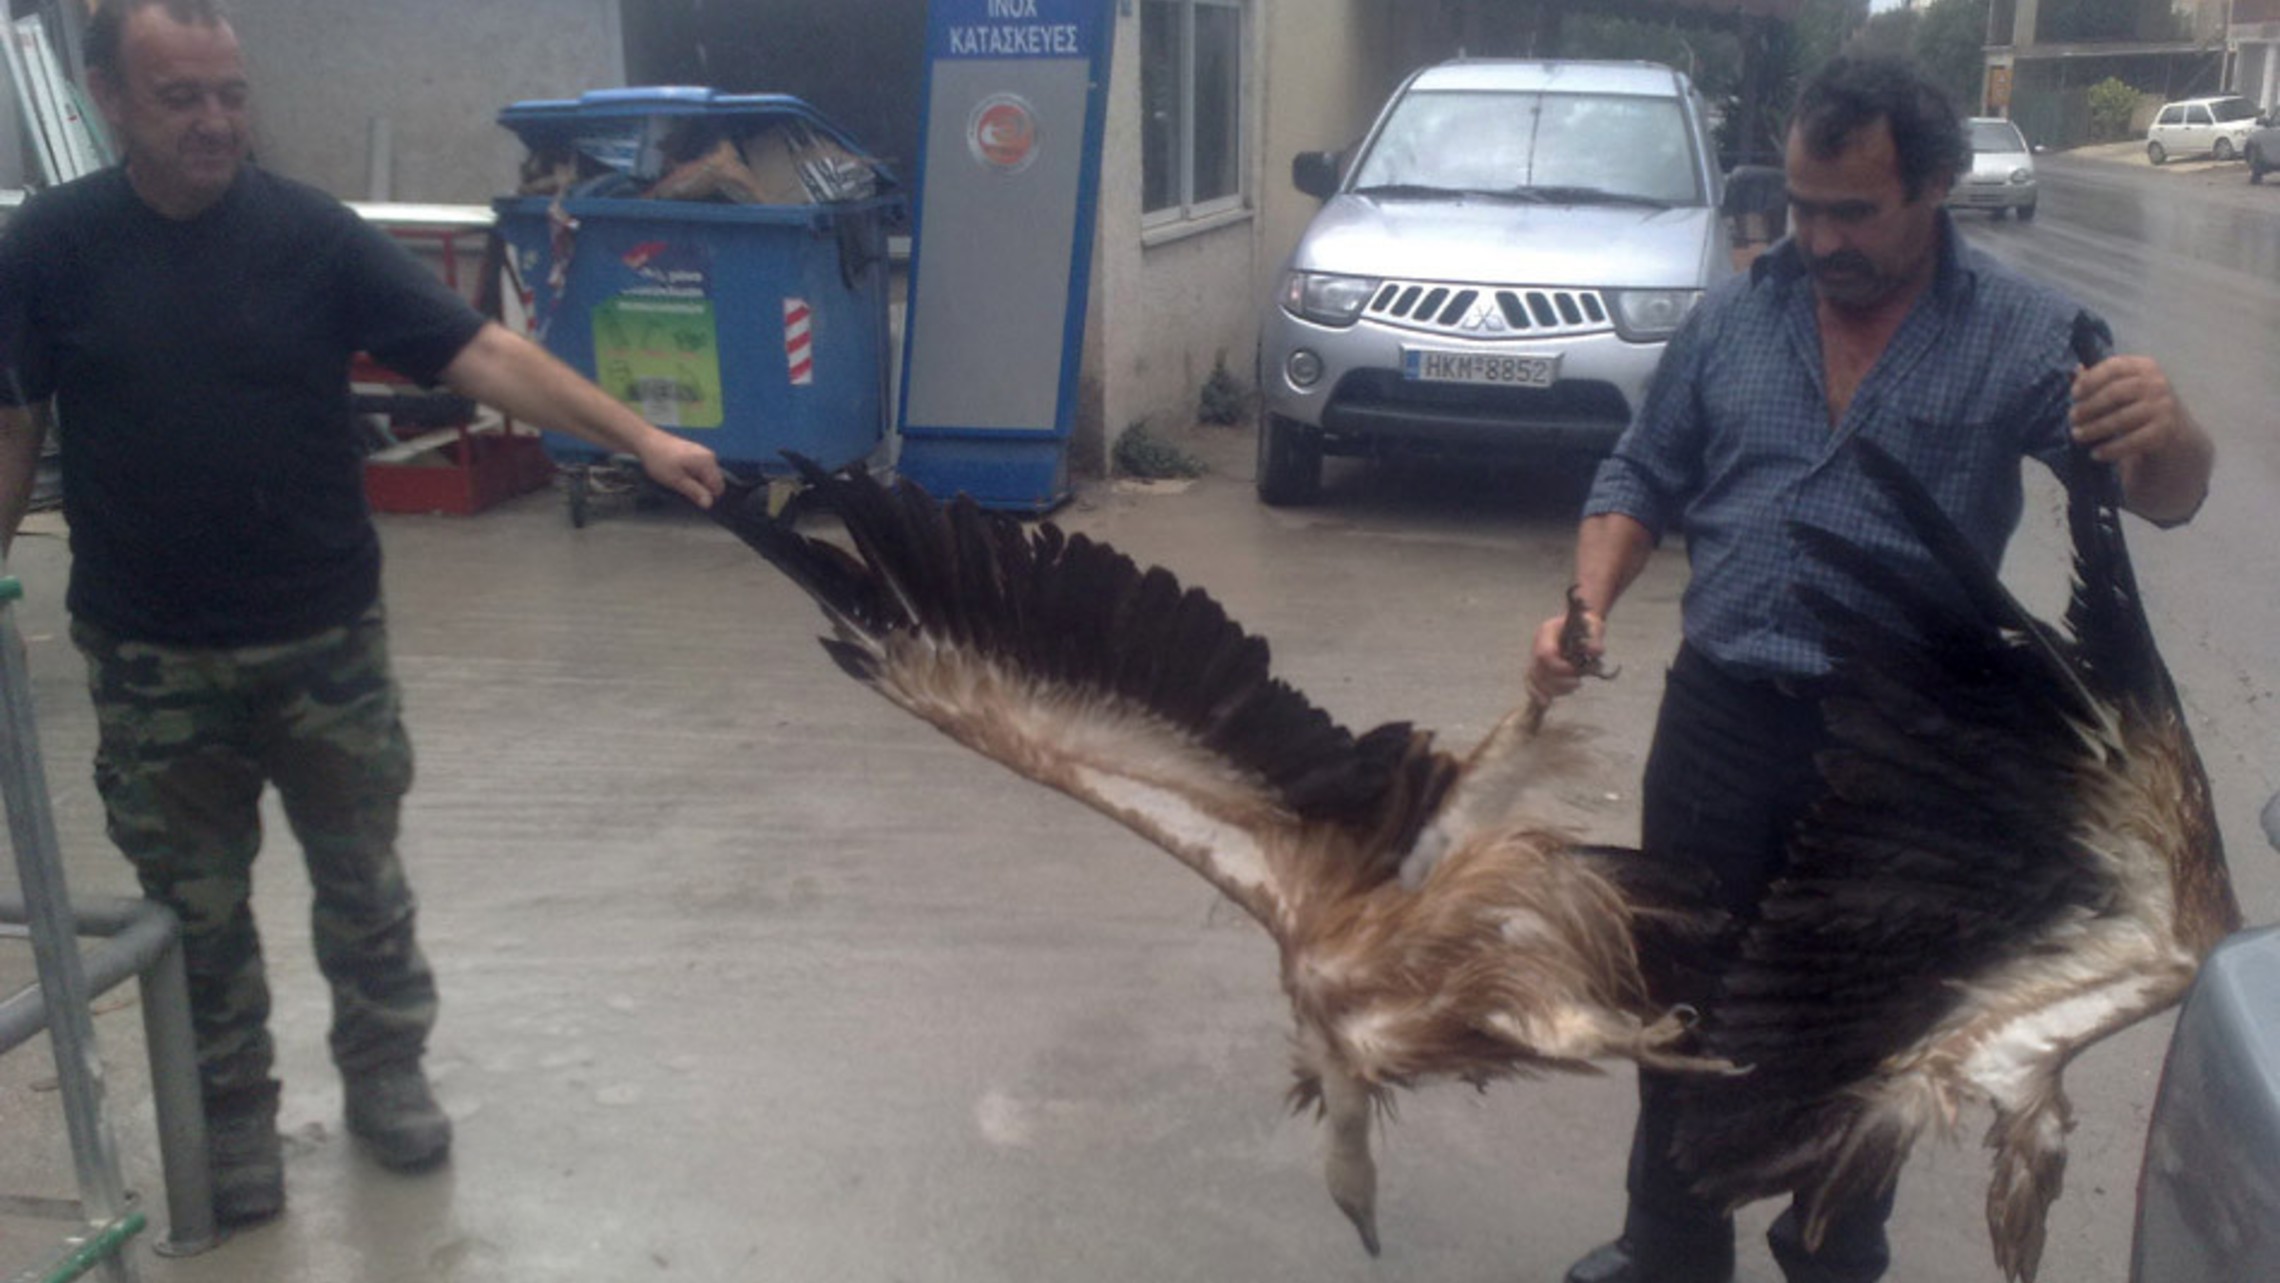 Wind Turbine Dead Griffin Vulture 2